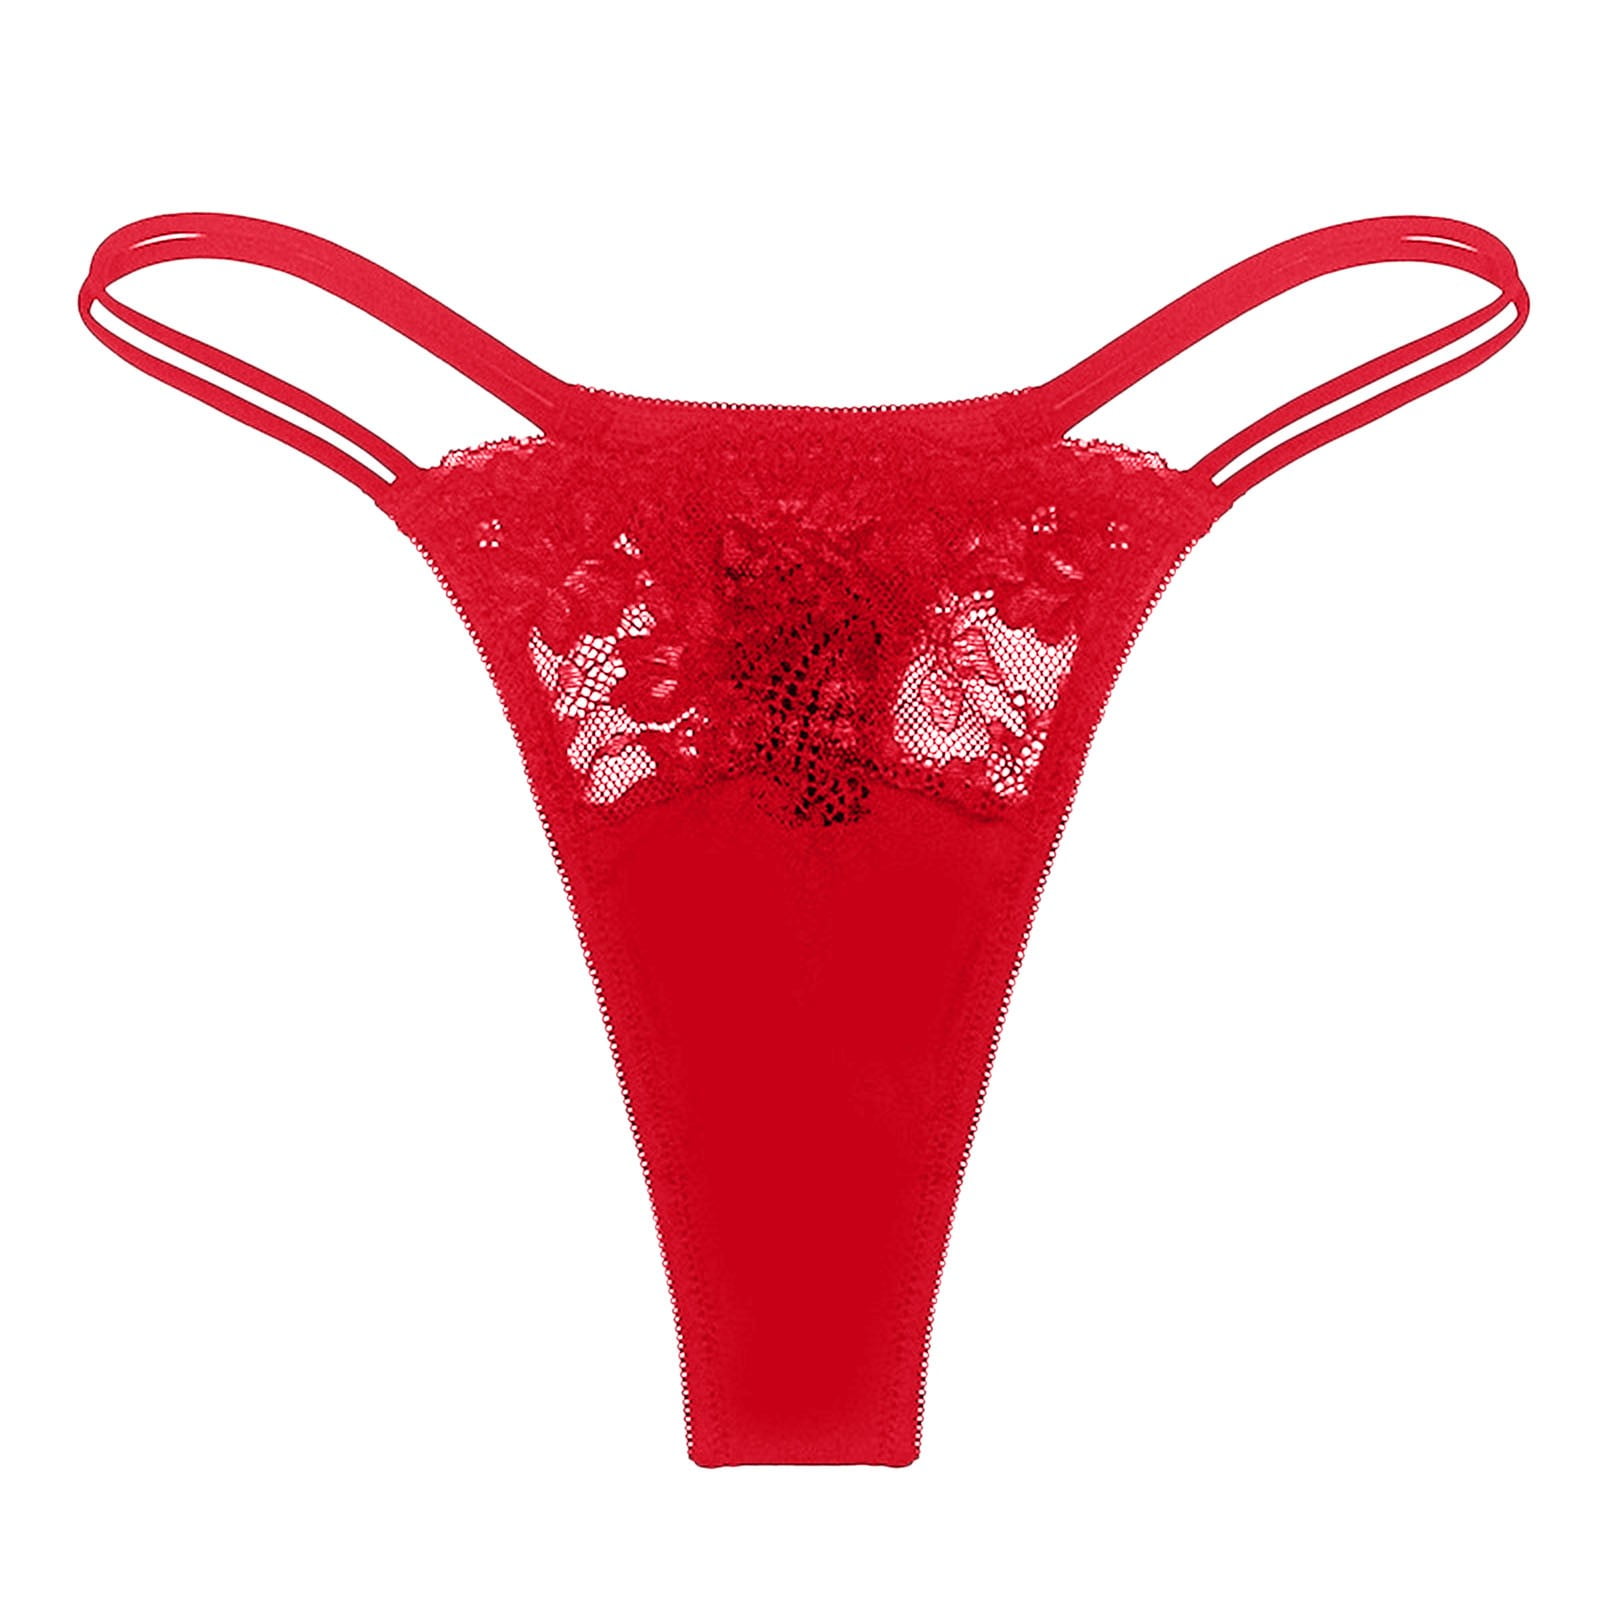 CAICJ98 Lingerie for Women Women's Fashion Casual Low Waist Underwear Color  Striped Briefs Underwear Women Panties,Red 